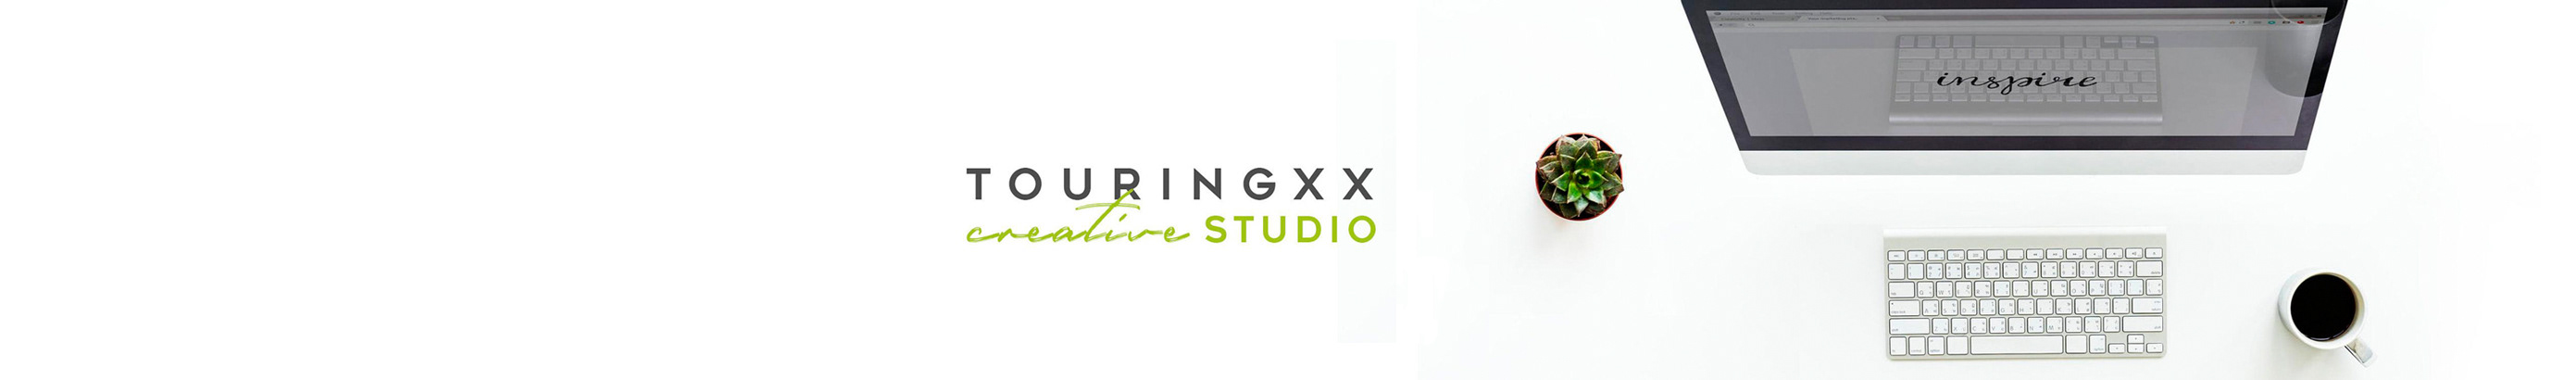 Profielbanner van Touringxx Creative Studio